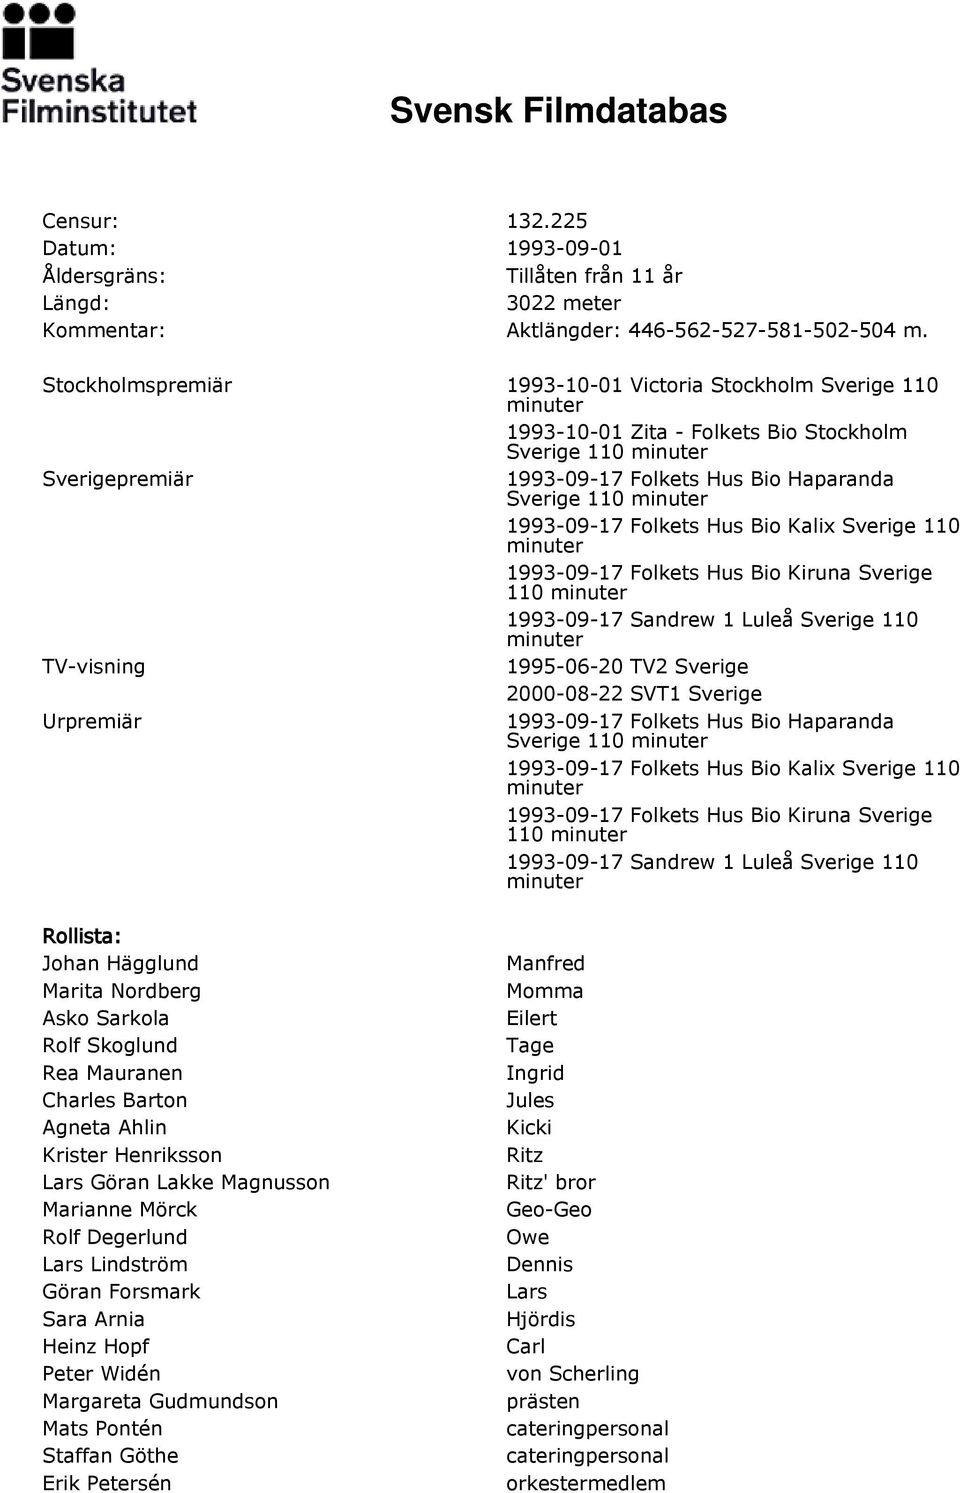 Bio Kalix Sverige 110 1993-09-17 Folkets Hus Bio Kiruna Sverige 110 1993-09-17 Sandrew 1 Luleå Sverige 110 TV-visning 1995-06-20 TV2 Sverige 2000-08-22 SVT1 Sverige Urpremiär 1993-09-17 Folkets Hus